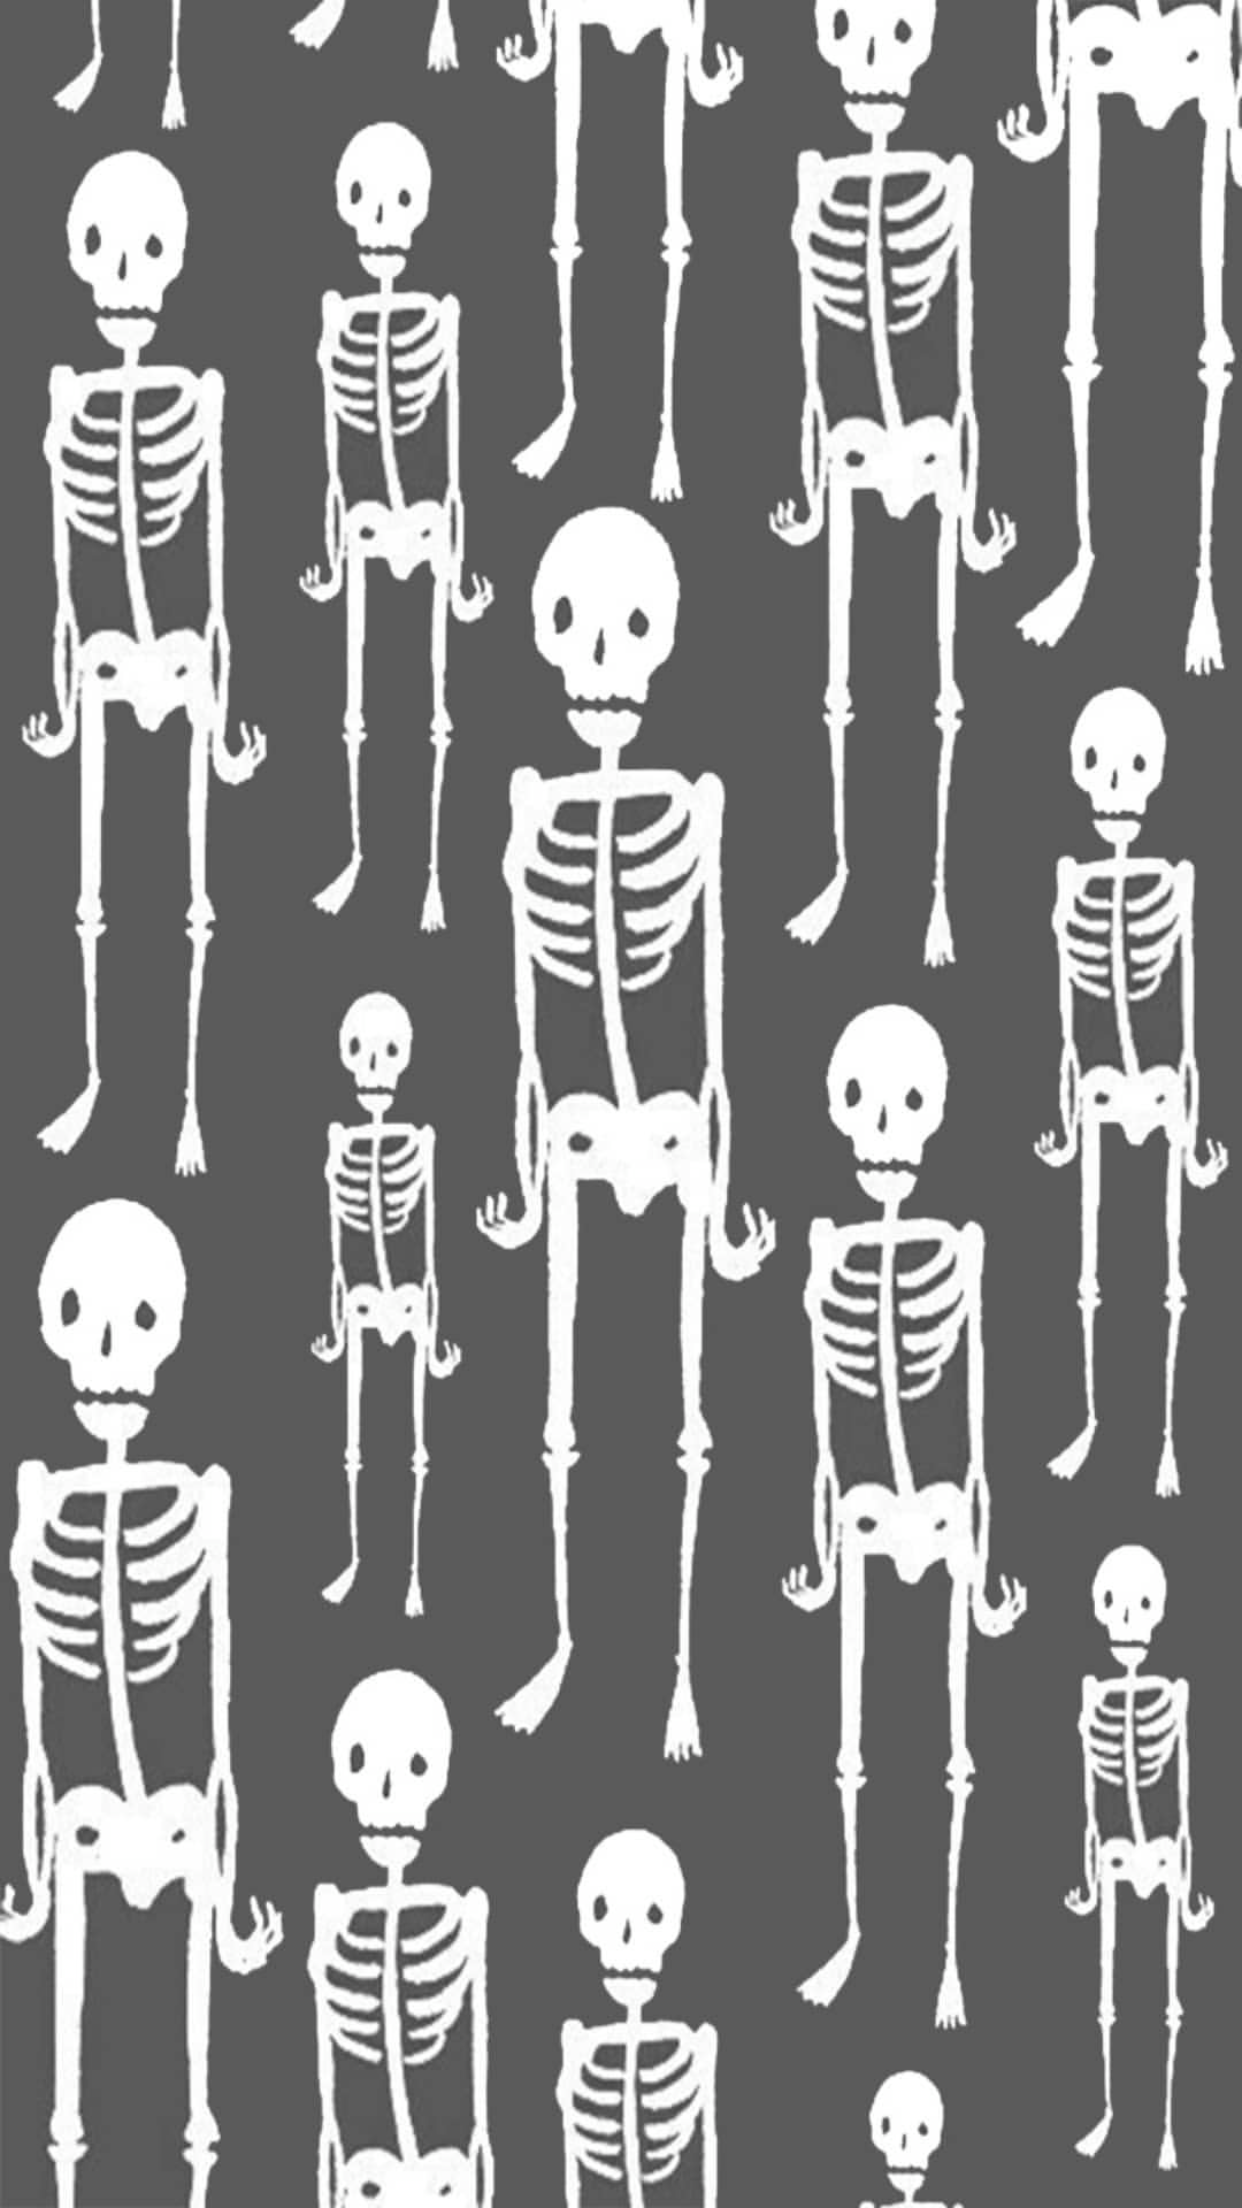 Halloween skeleton bones lock screen wallpaper background for android cellphone iPhone. Halloween wallpaper iphone, Halloween wallpaper, Halloween skeletons